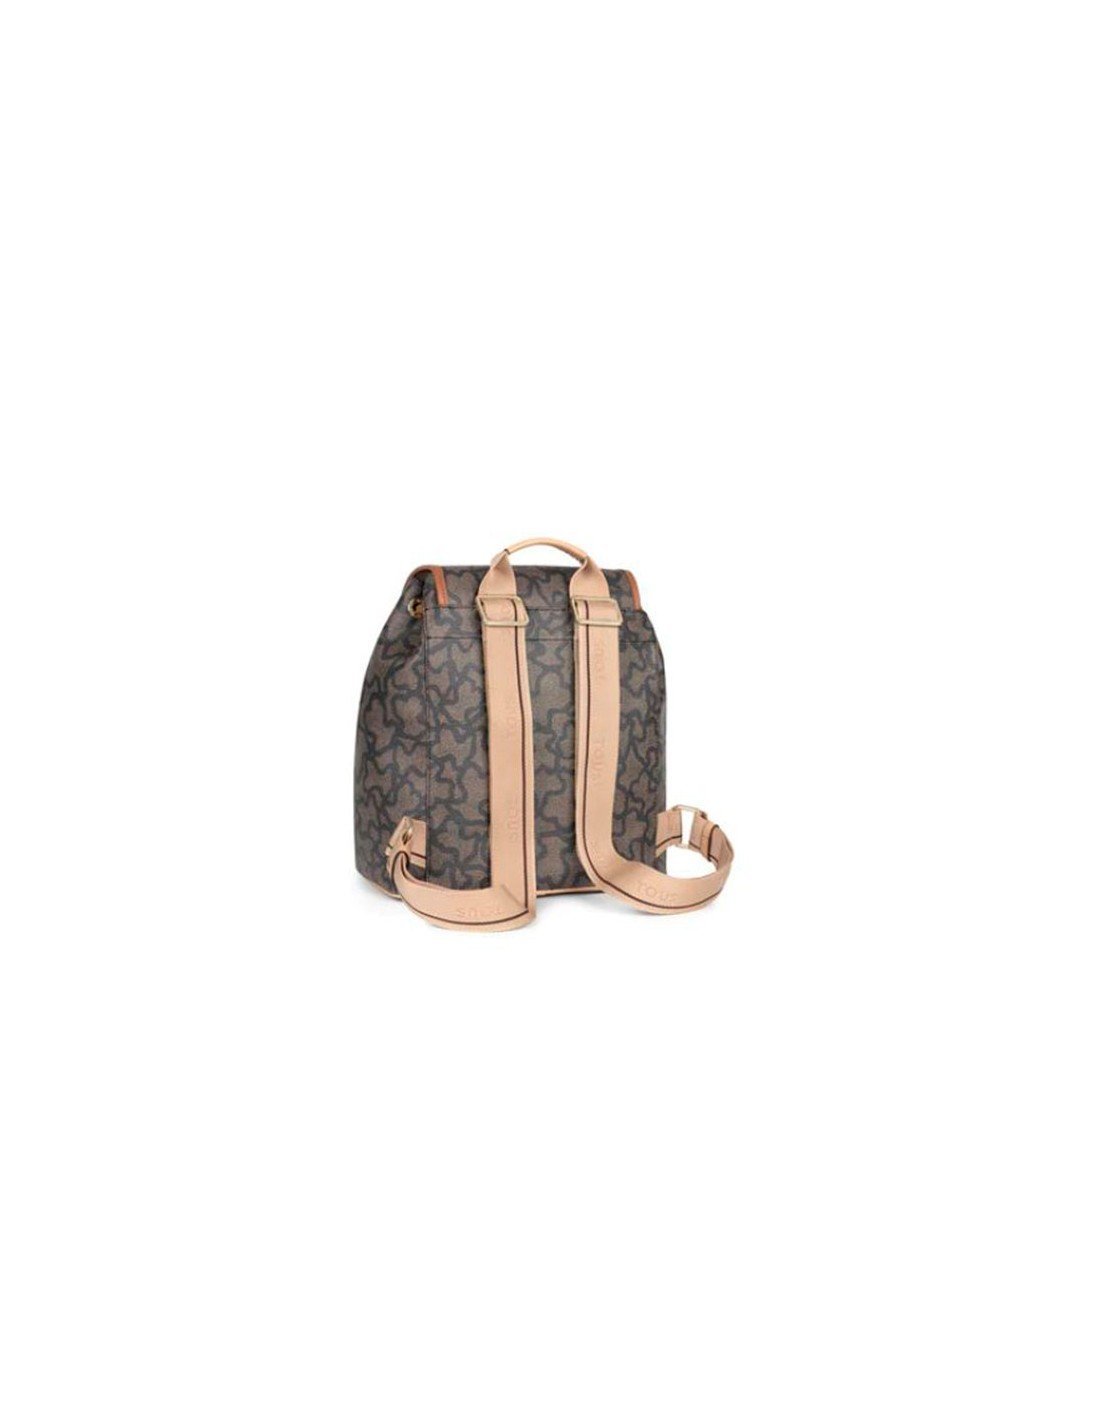 Tous Kaos Icon Multi Black Backpack, latest offers on Tous Moda fashion  accessories